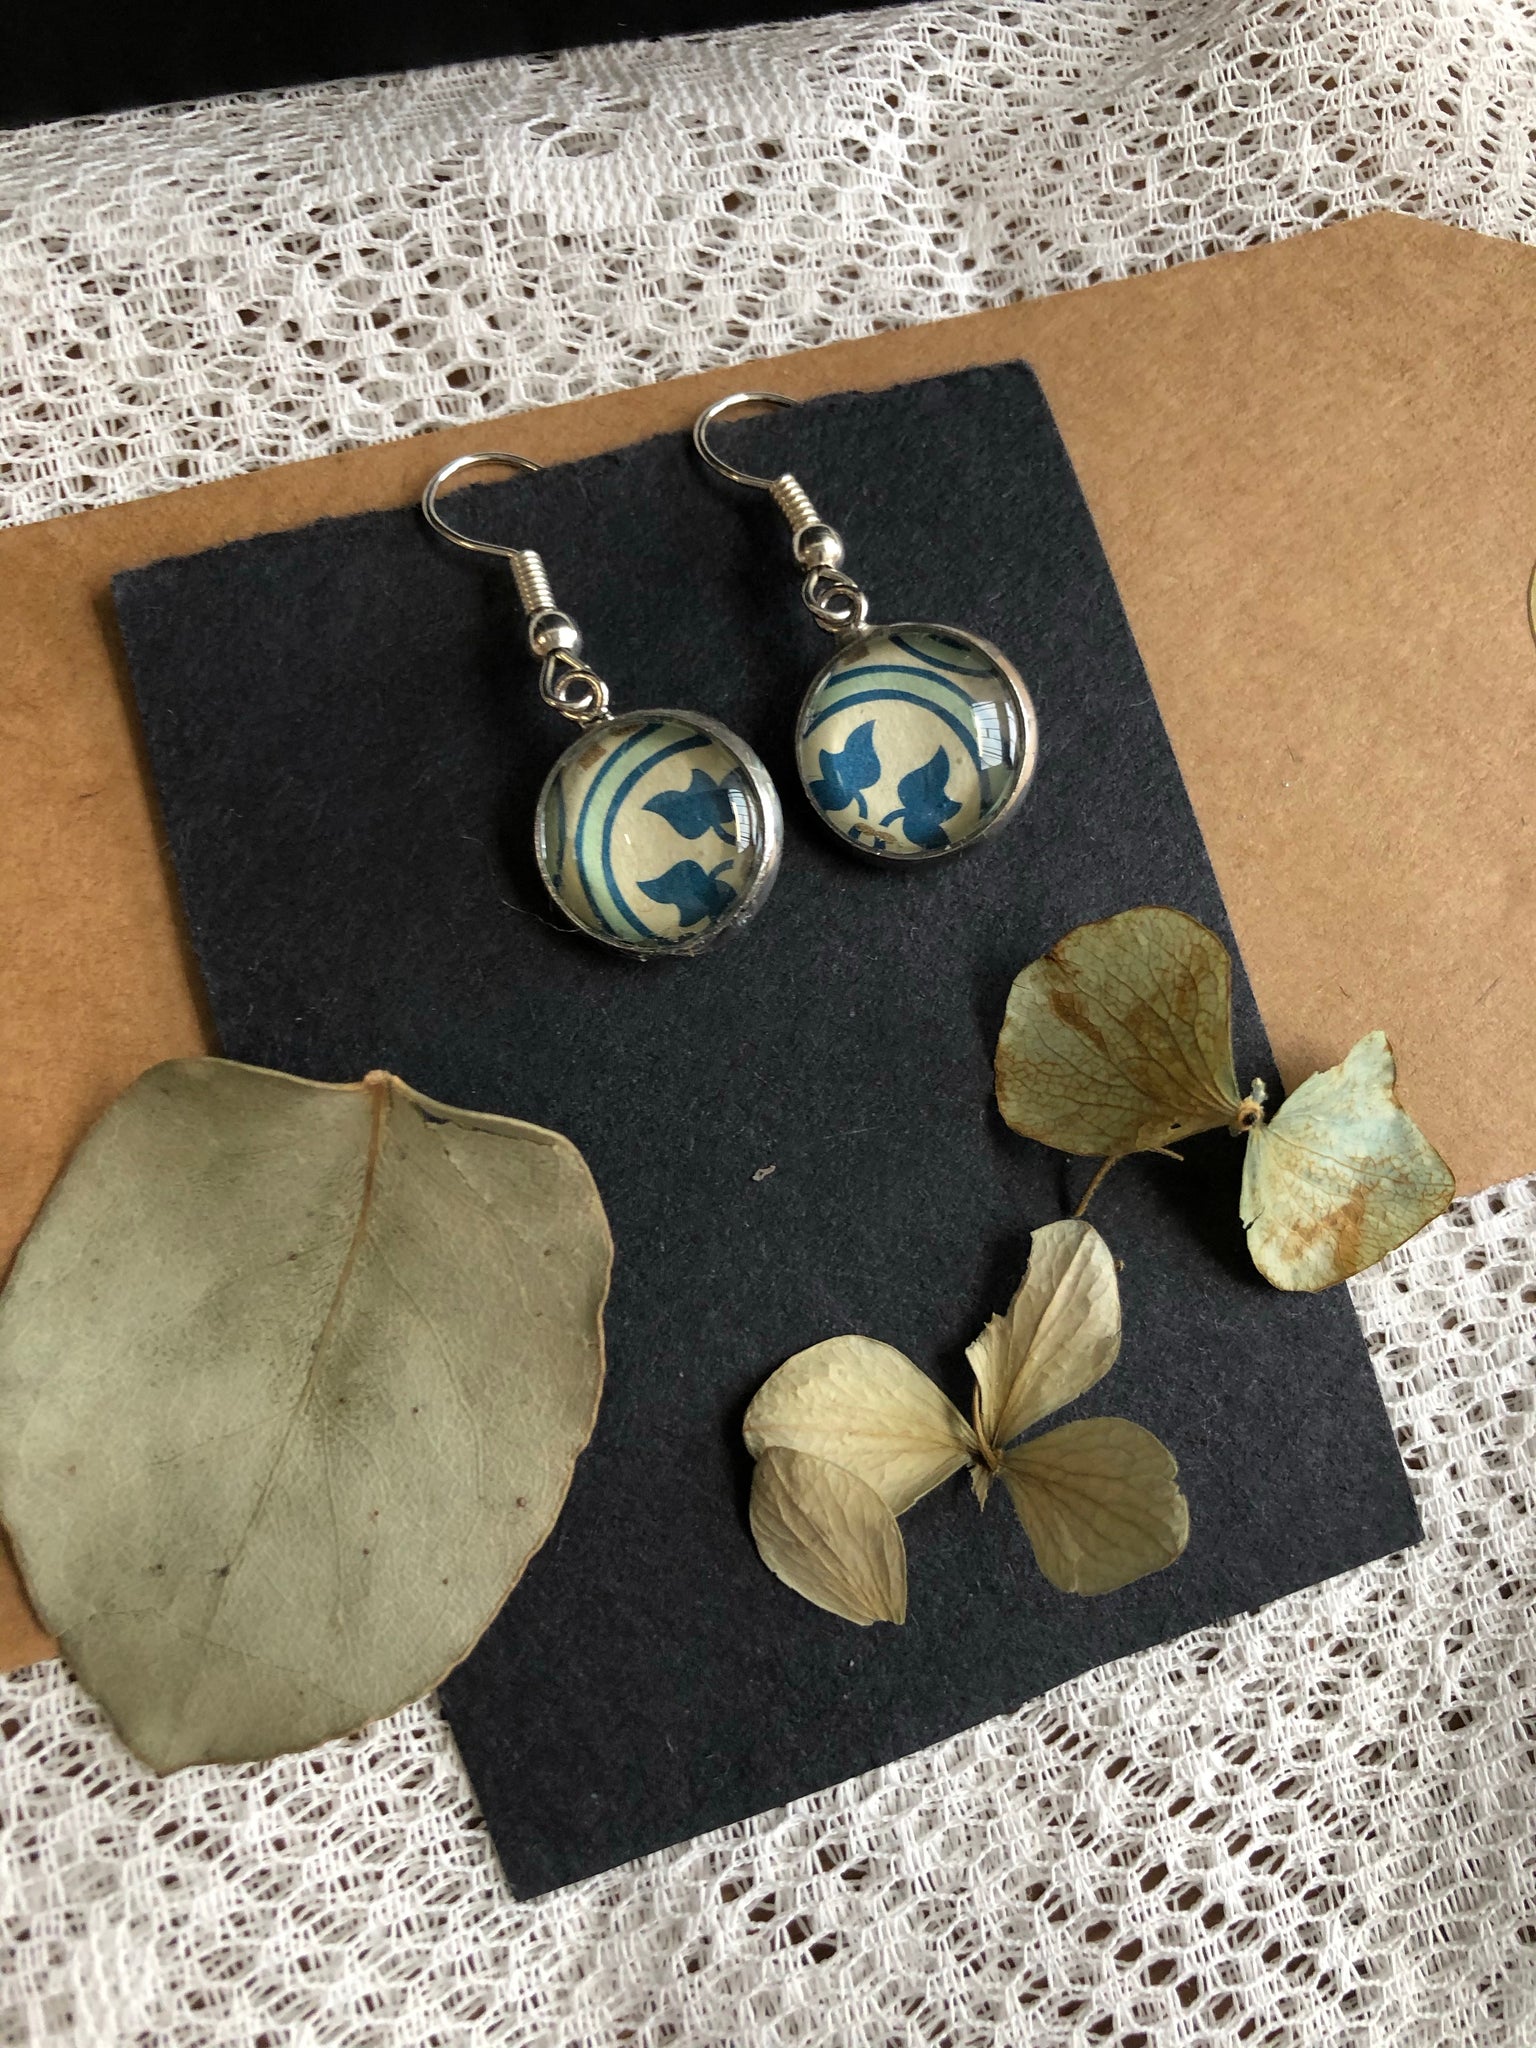 Vintage tile print design earrings